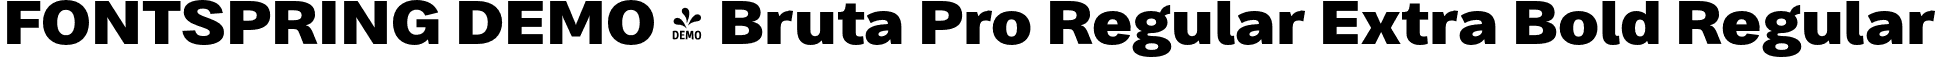 FONTSPRING DEMO - Bruta Pro Regular Extra Bold Regular font | Fontspring-DEMO-brutaproregular-extrabold.otf